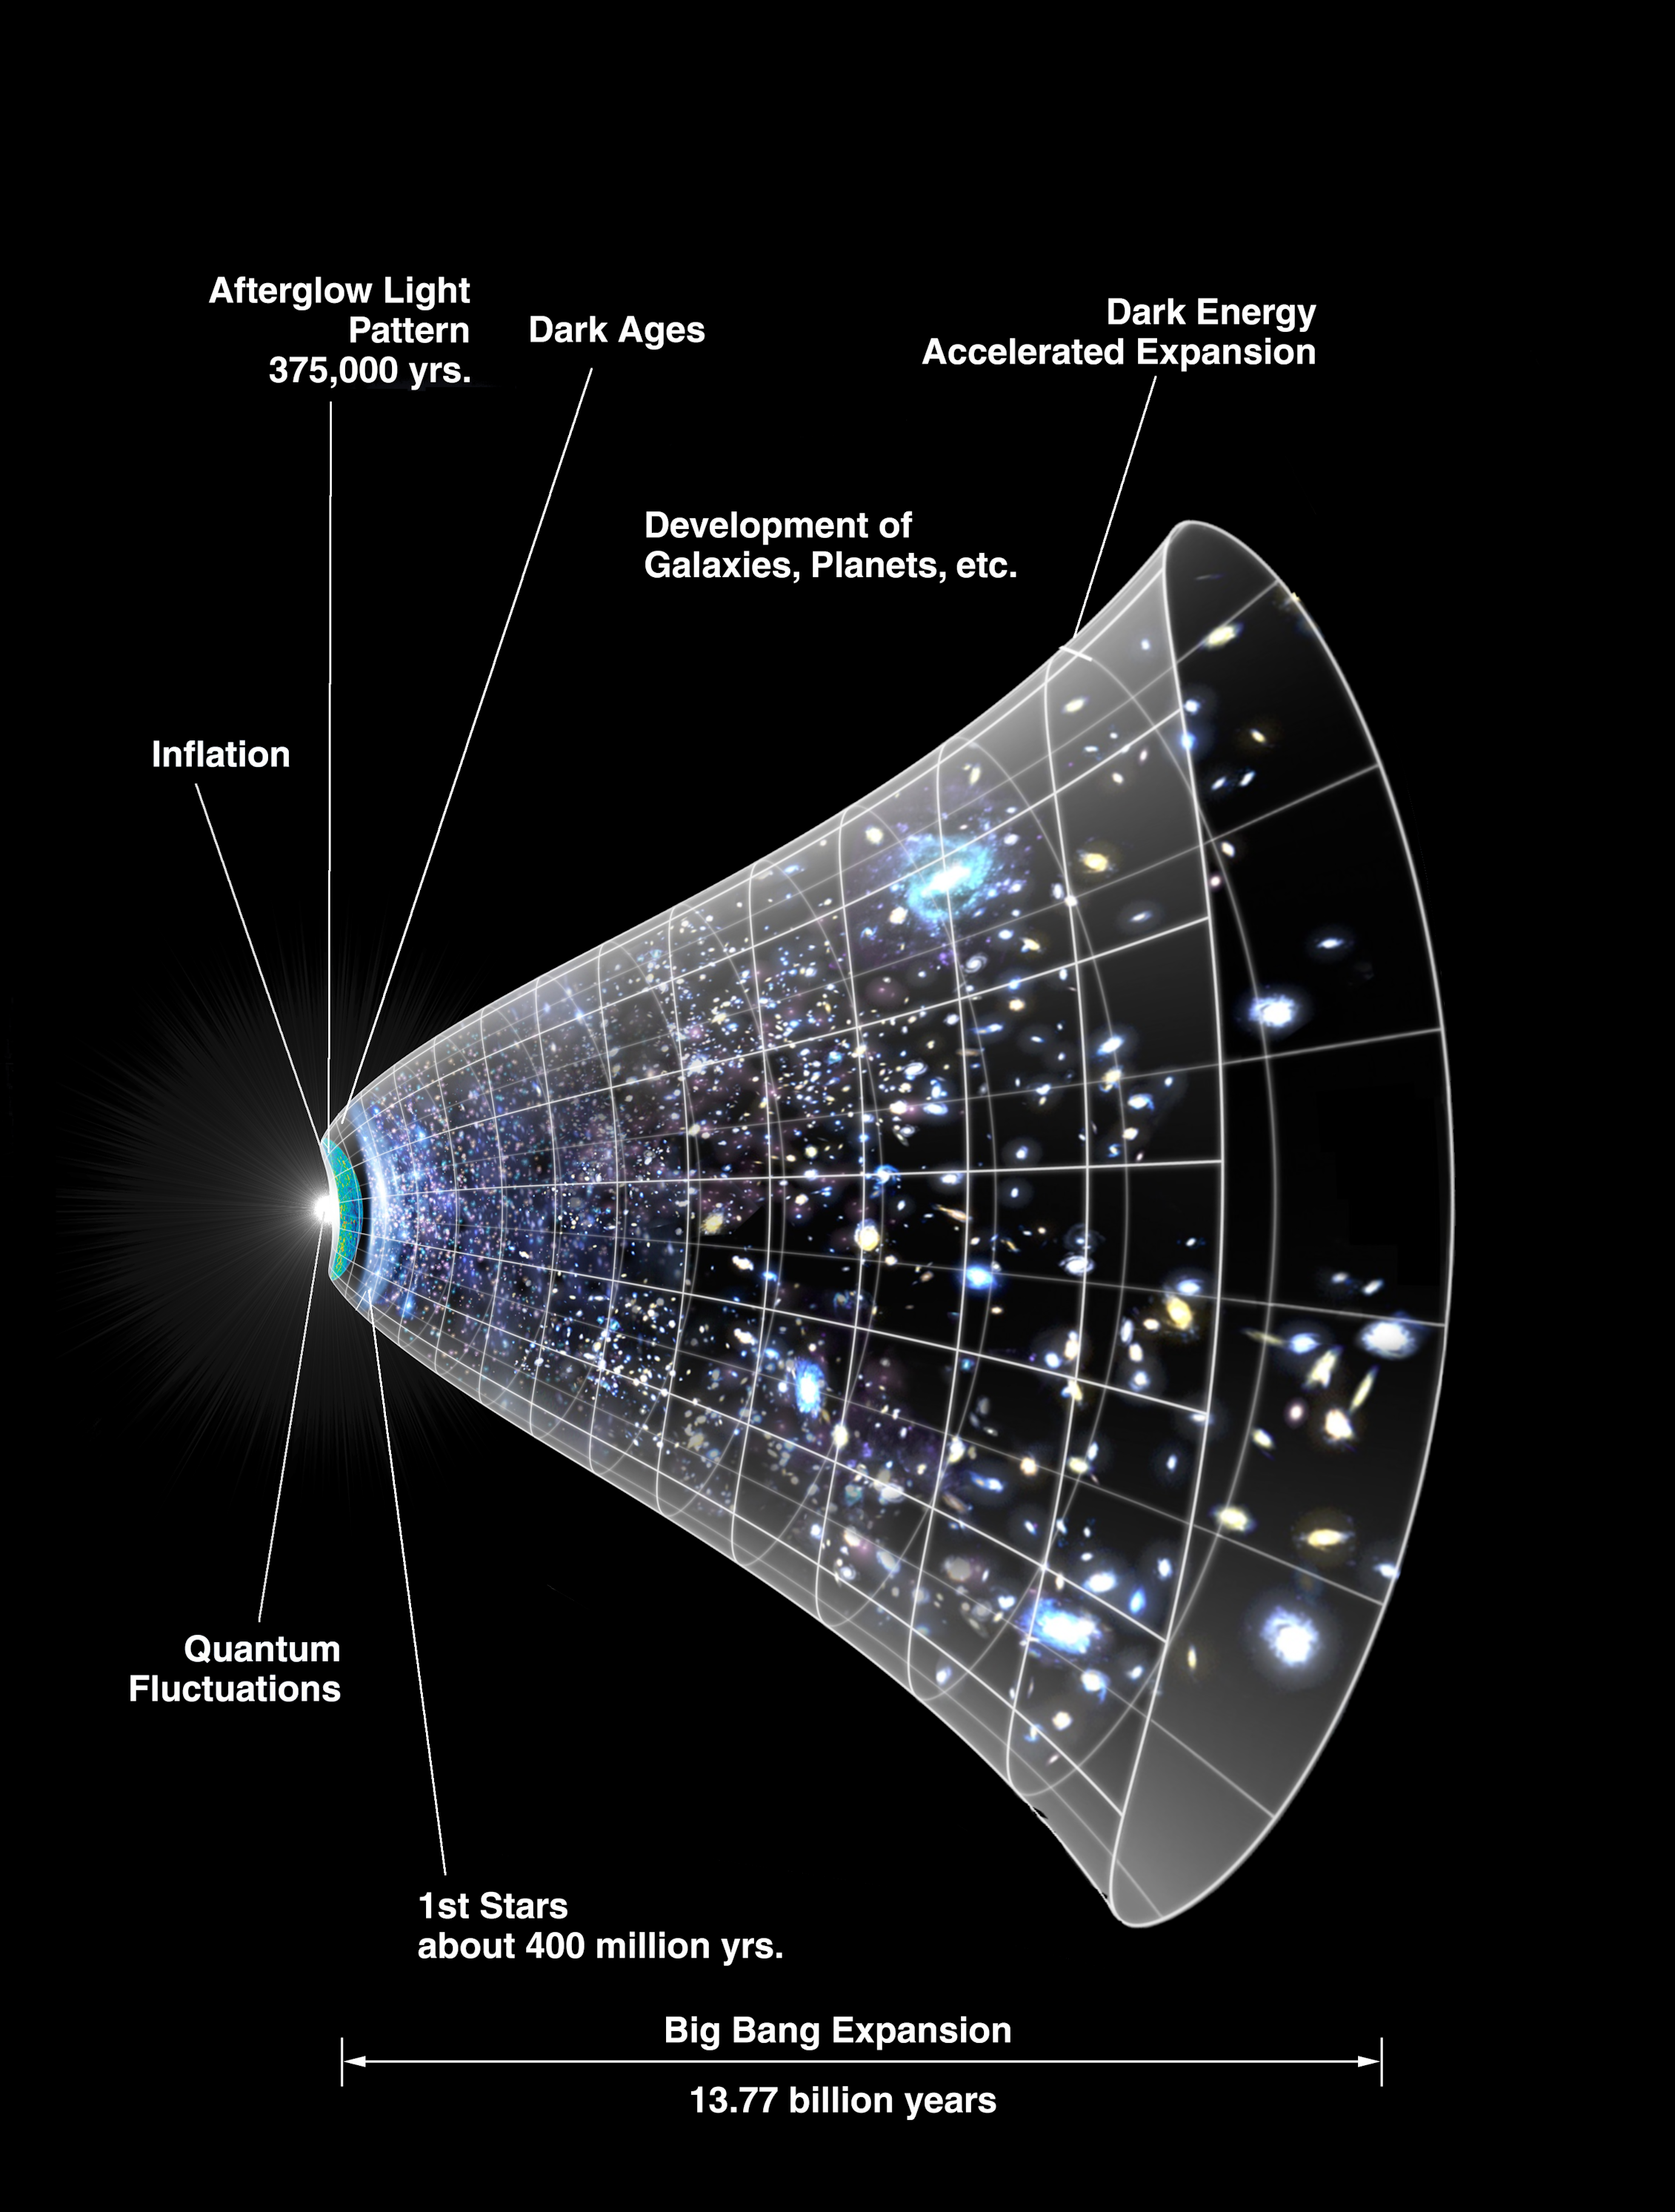 modern cosmology tour